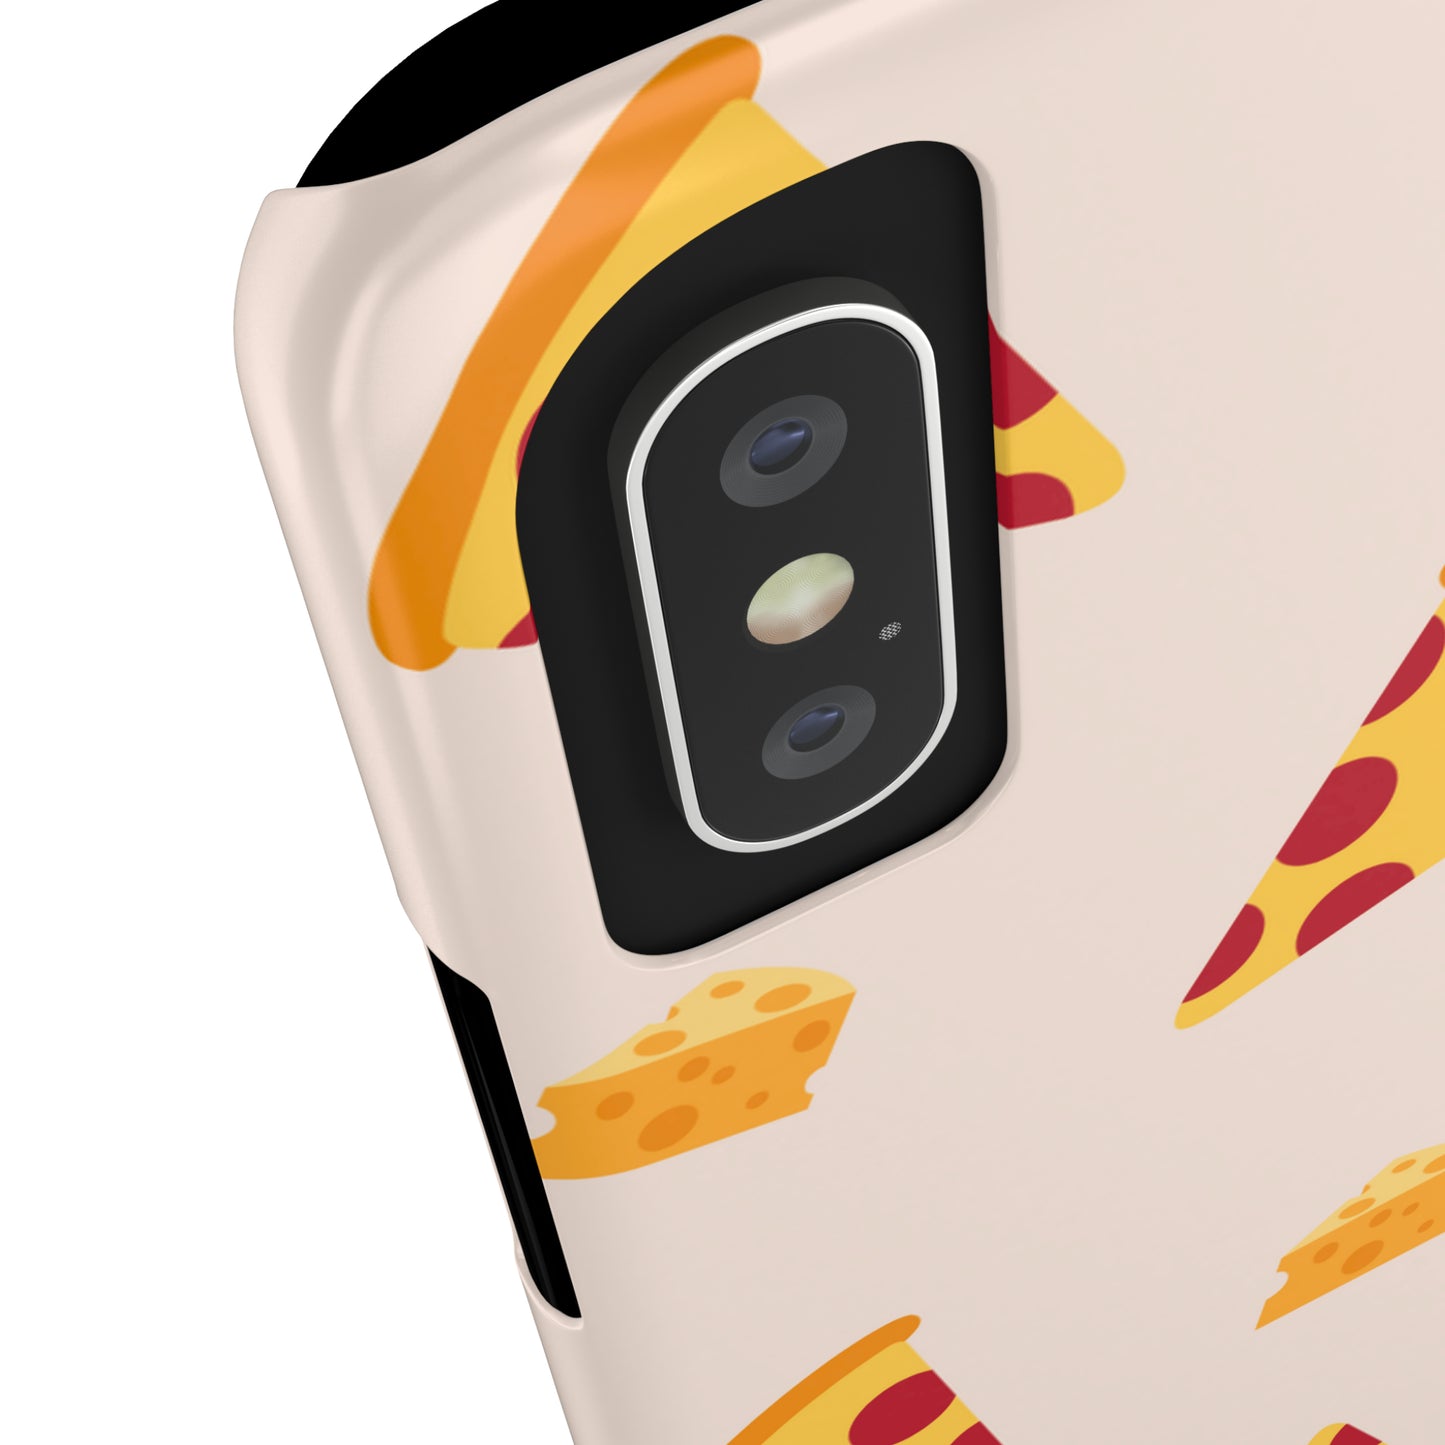 Pizza Cheese Slim Phone Cases